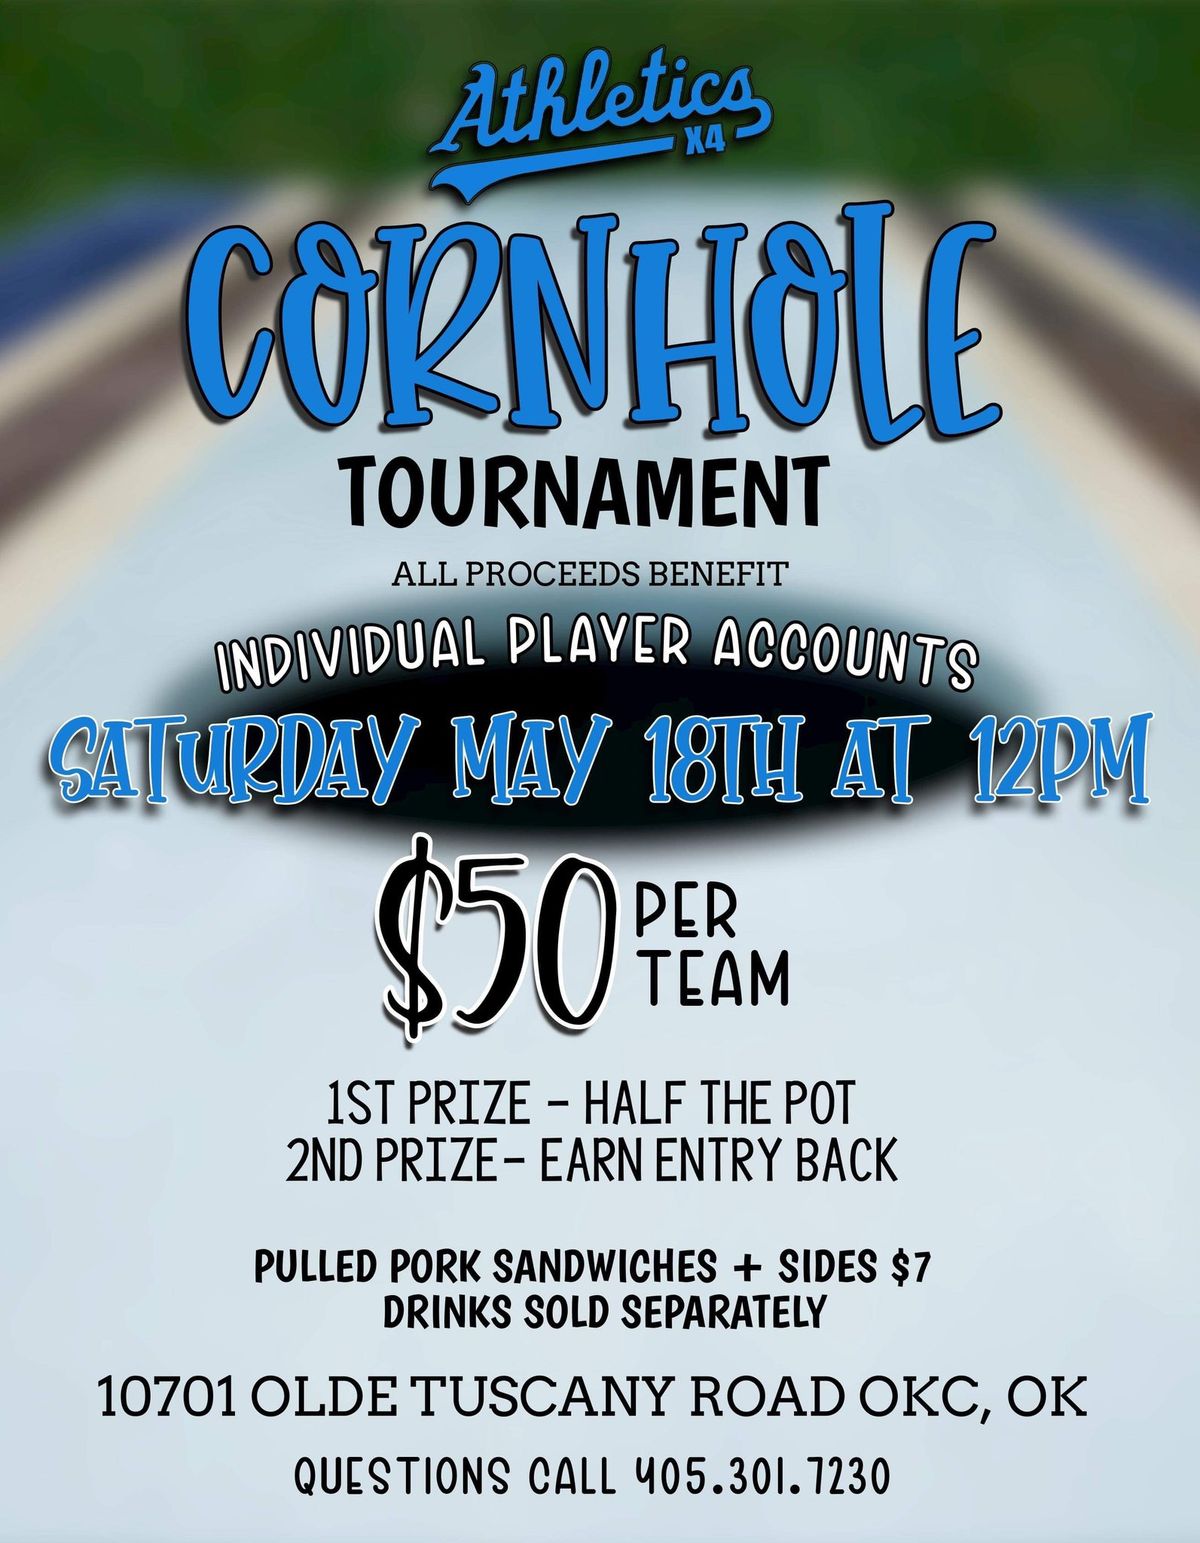 Cornhole tournament!